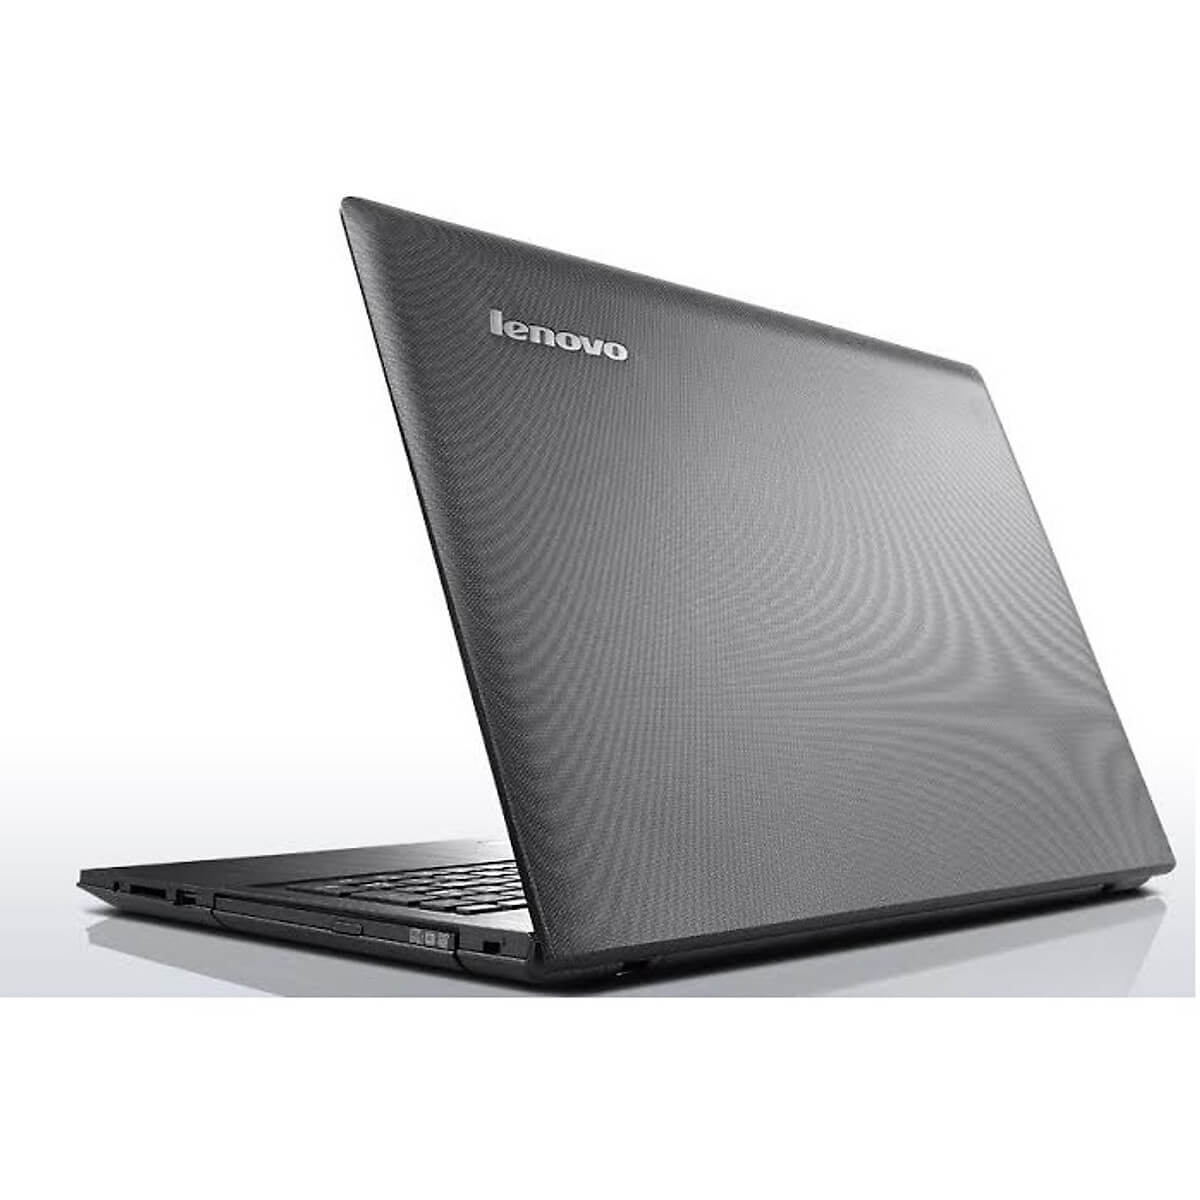 Laptop Lenovo G5070 Core i3-4005U, Ram 4GB, HDD 500GB, 15.6 Inch HD